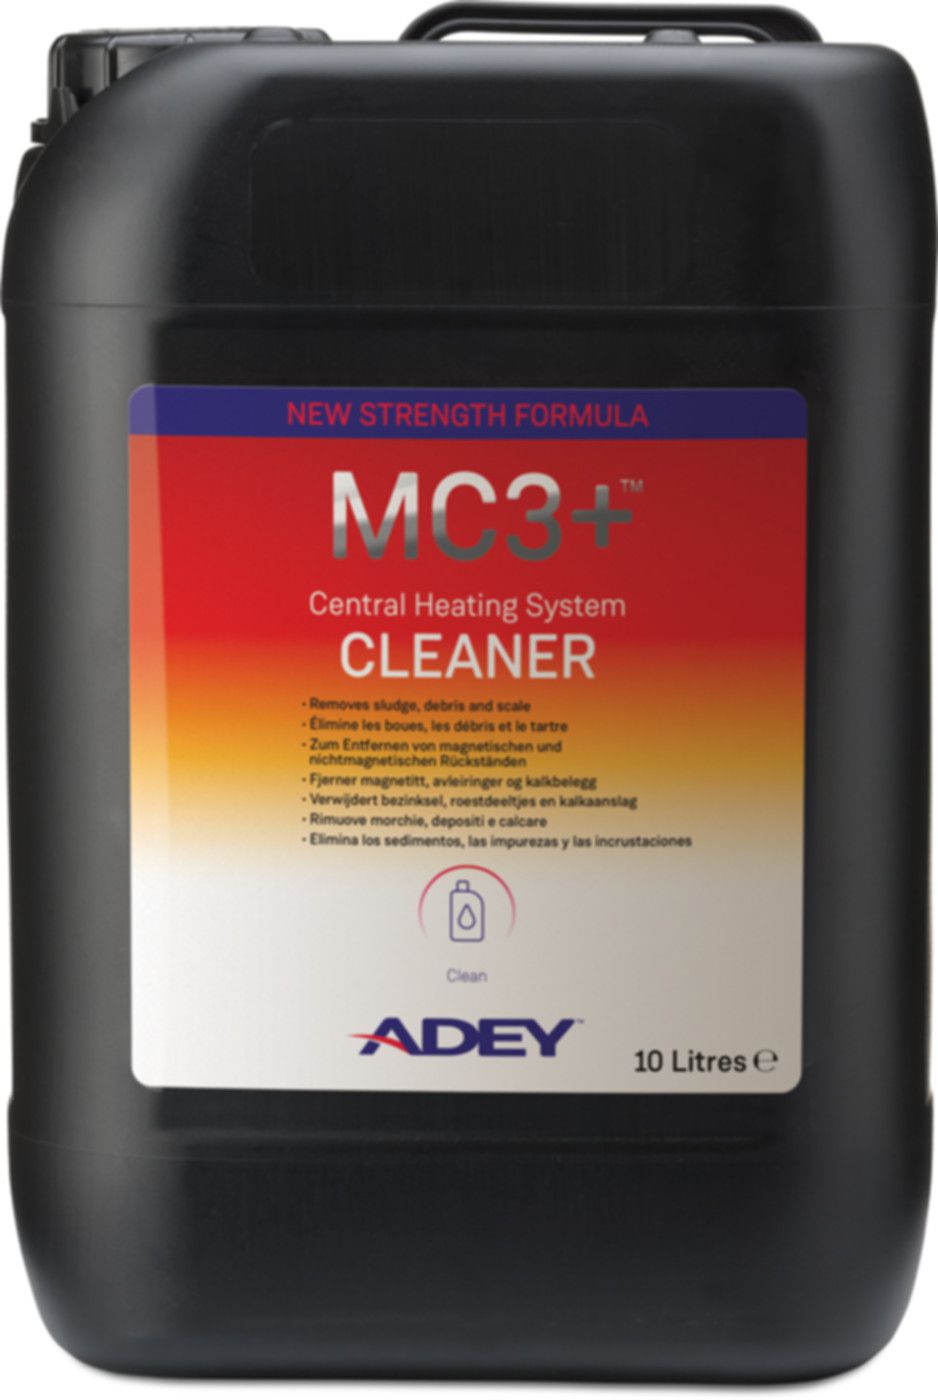 Heizungsreiniger ADEY Cleaner MC3+ Rapid - Egger + Co. AG